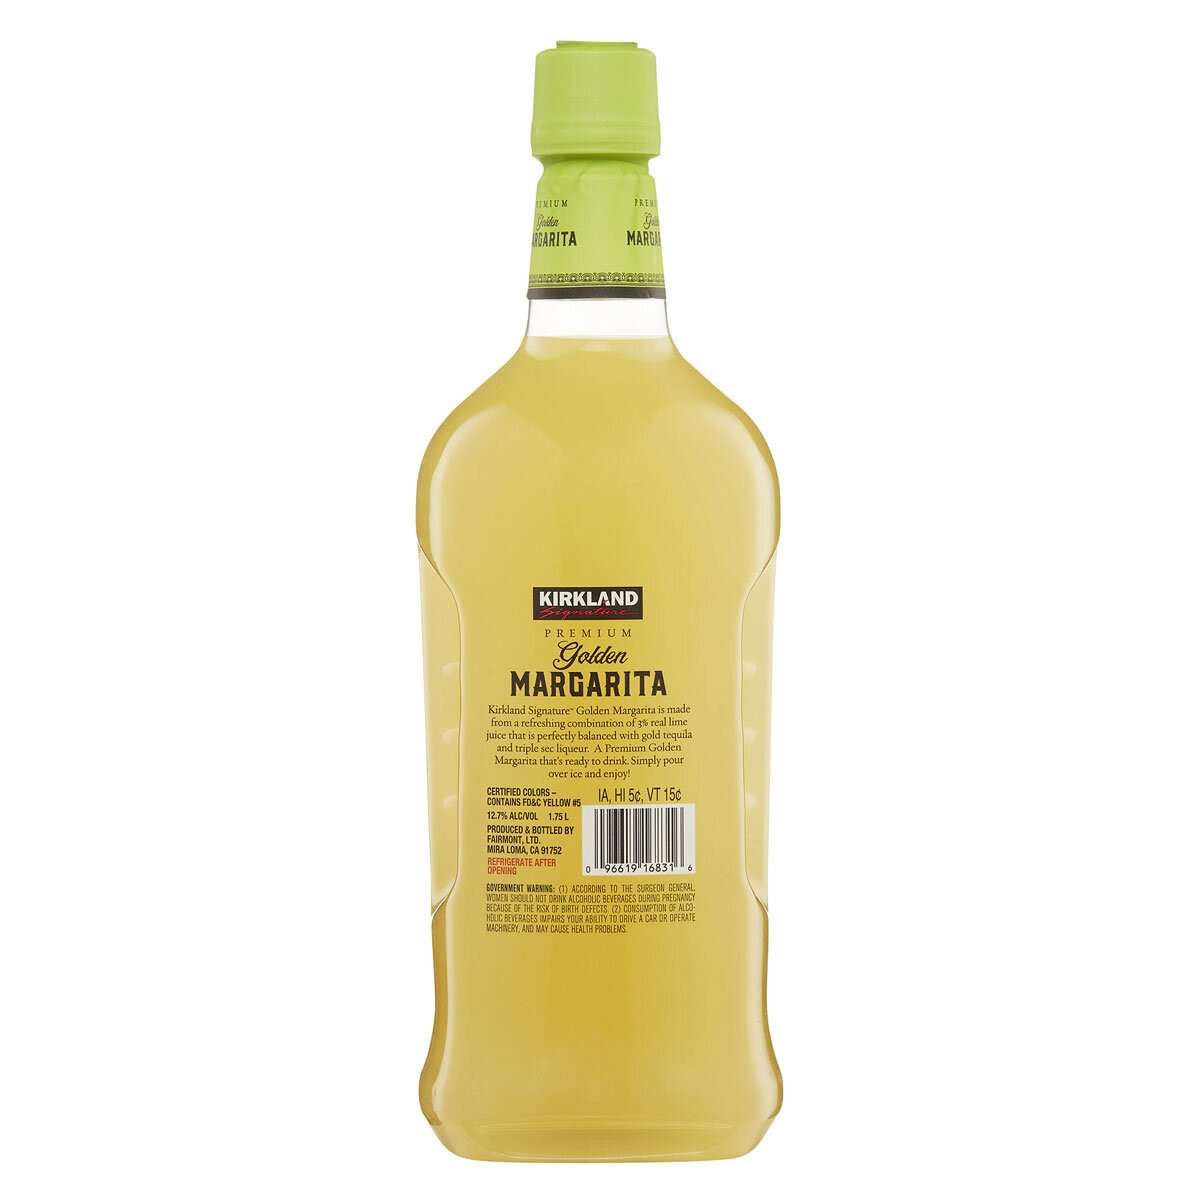 Kirkland Signature Golden Margarita Premium Ready-to-Drink, 1.75L